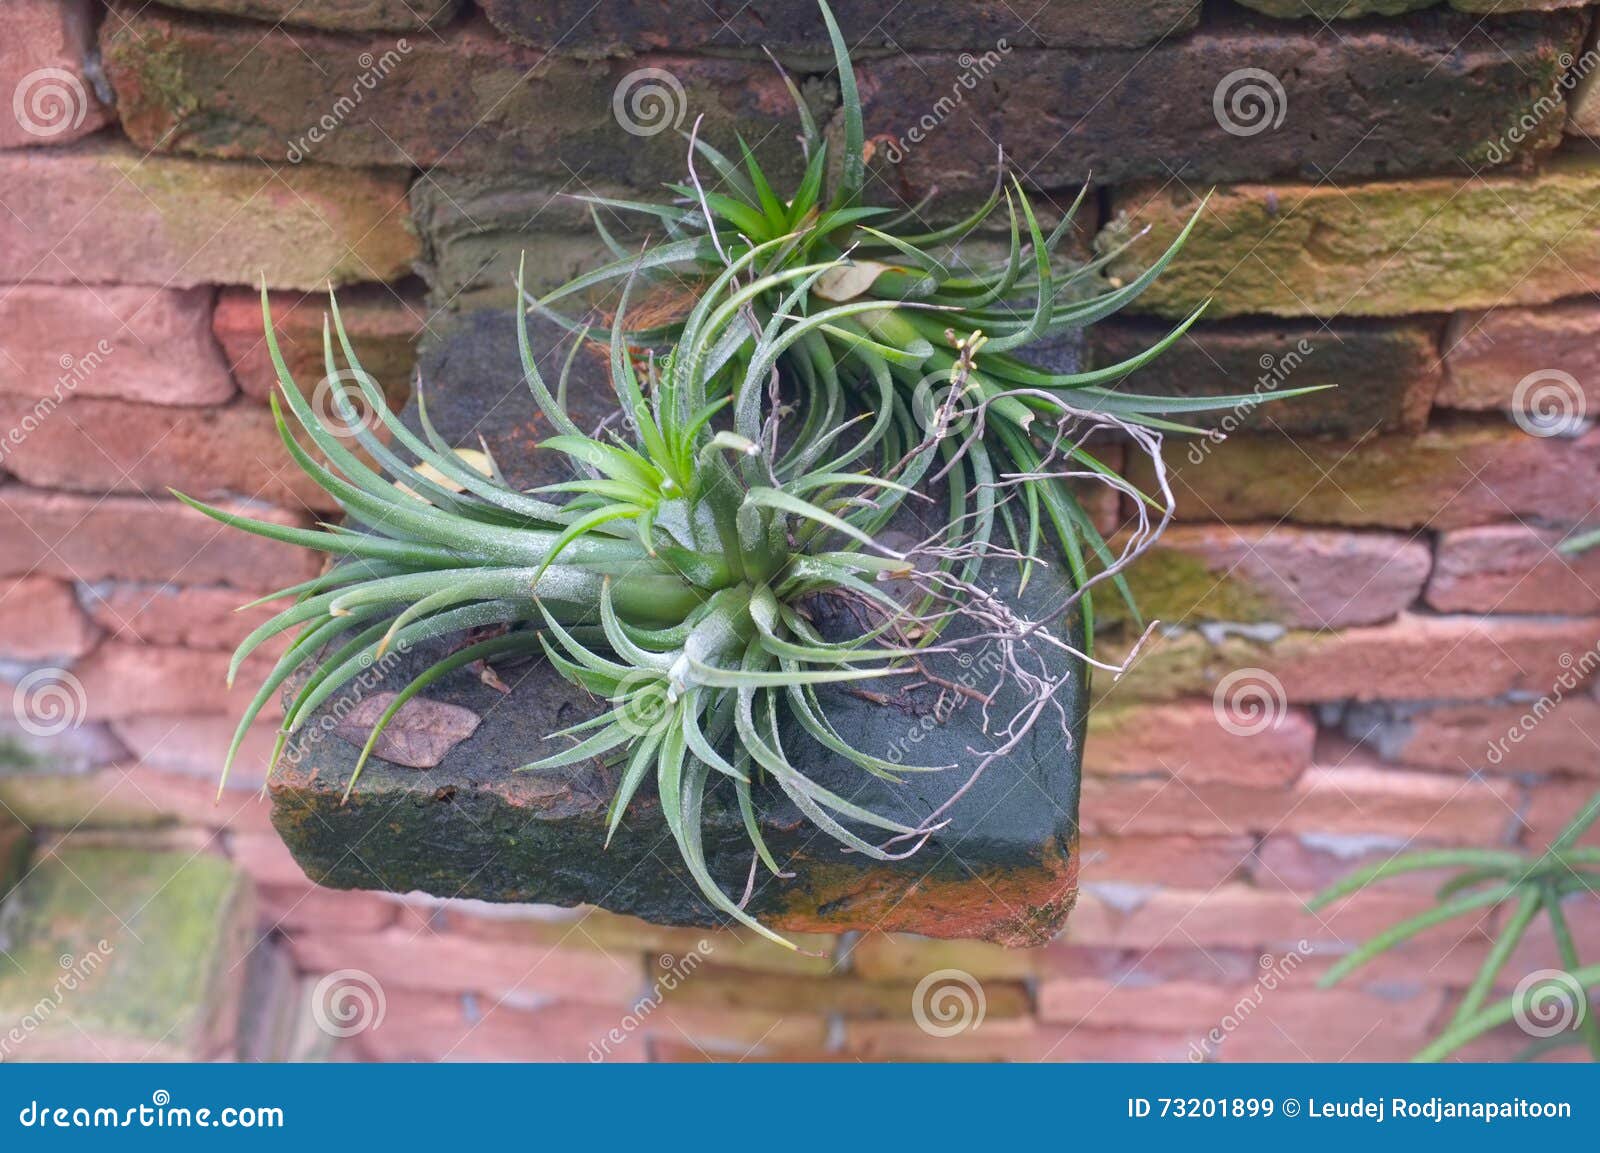 Mini green bromeliad stock image. Image of botany, bracts - 73201899